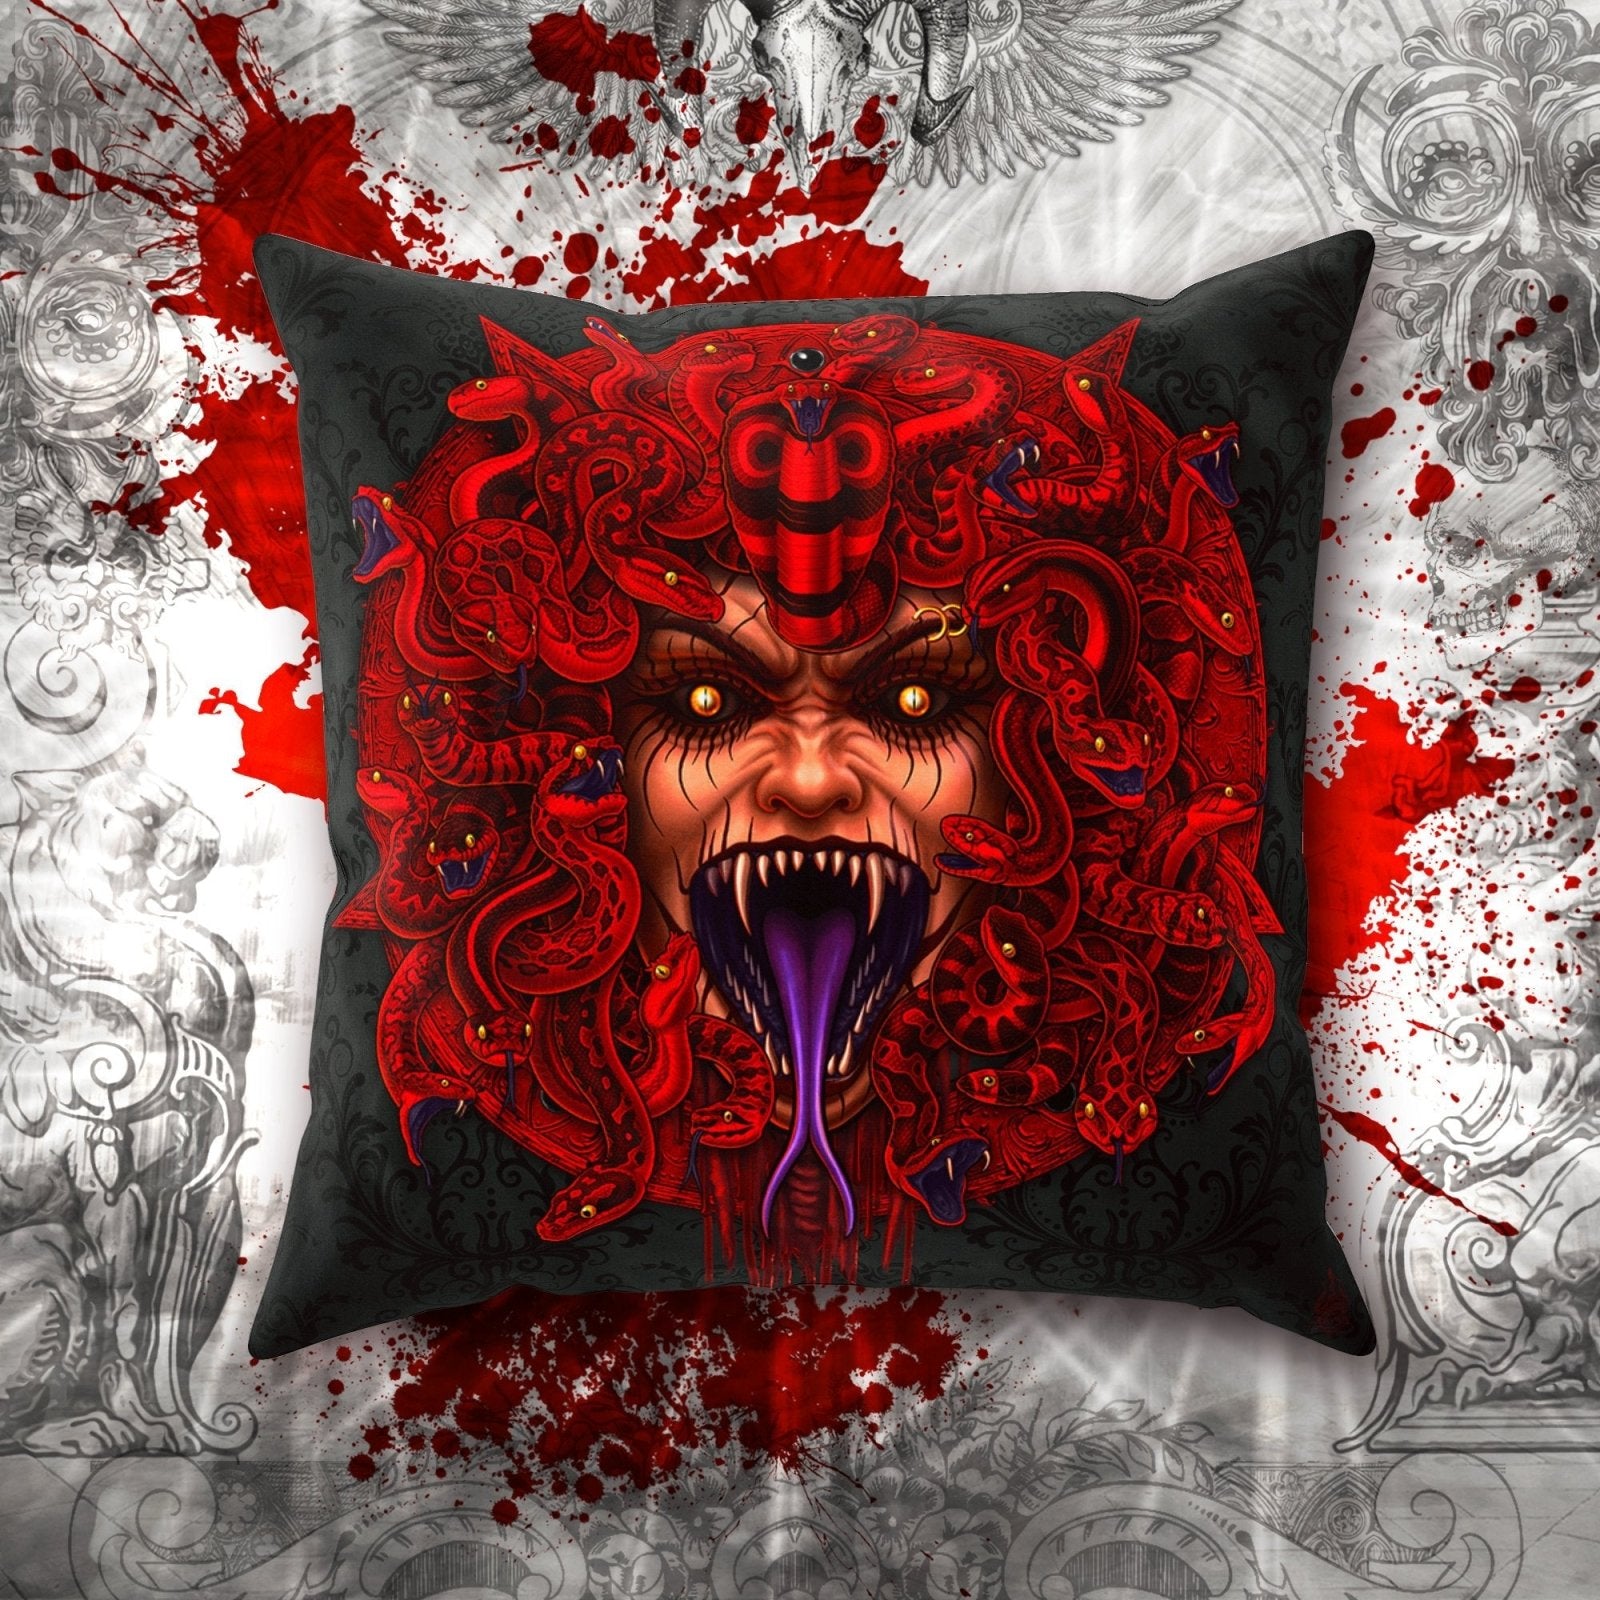 Demon Throw Pillow, Decorative Accent Cushion, Medusa, Satanic and Gothic Room Decor, Horror Art, Alternative Home - Red Pentagram & Snakes, Rage - Abysm Internal